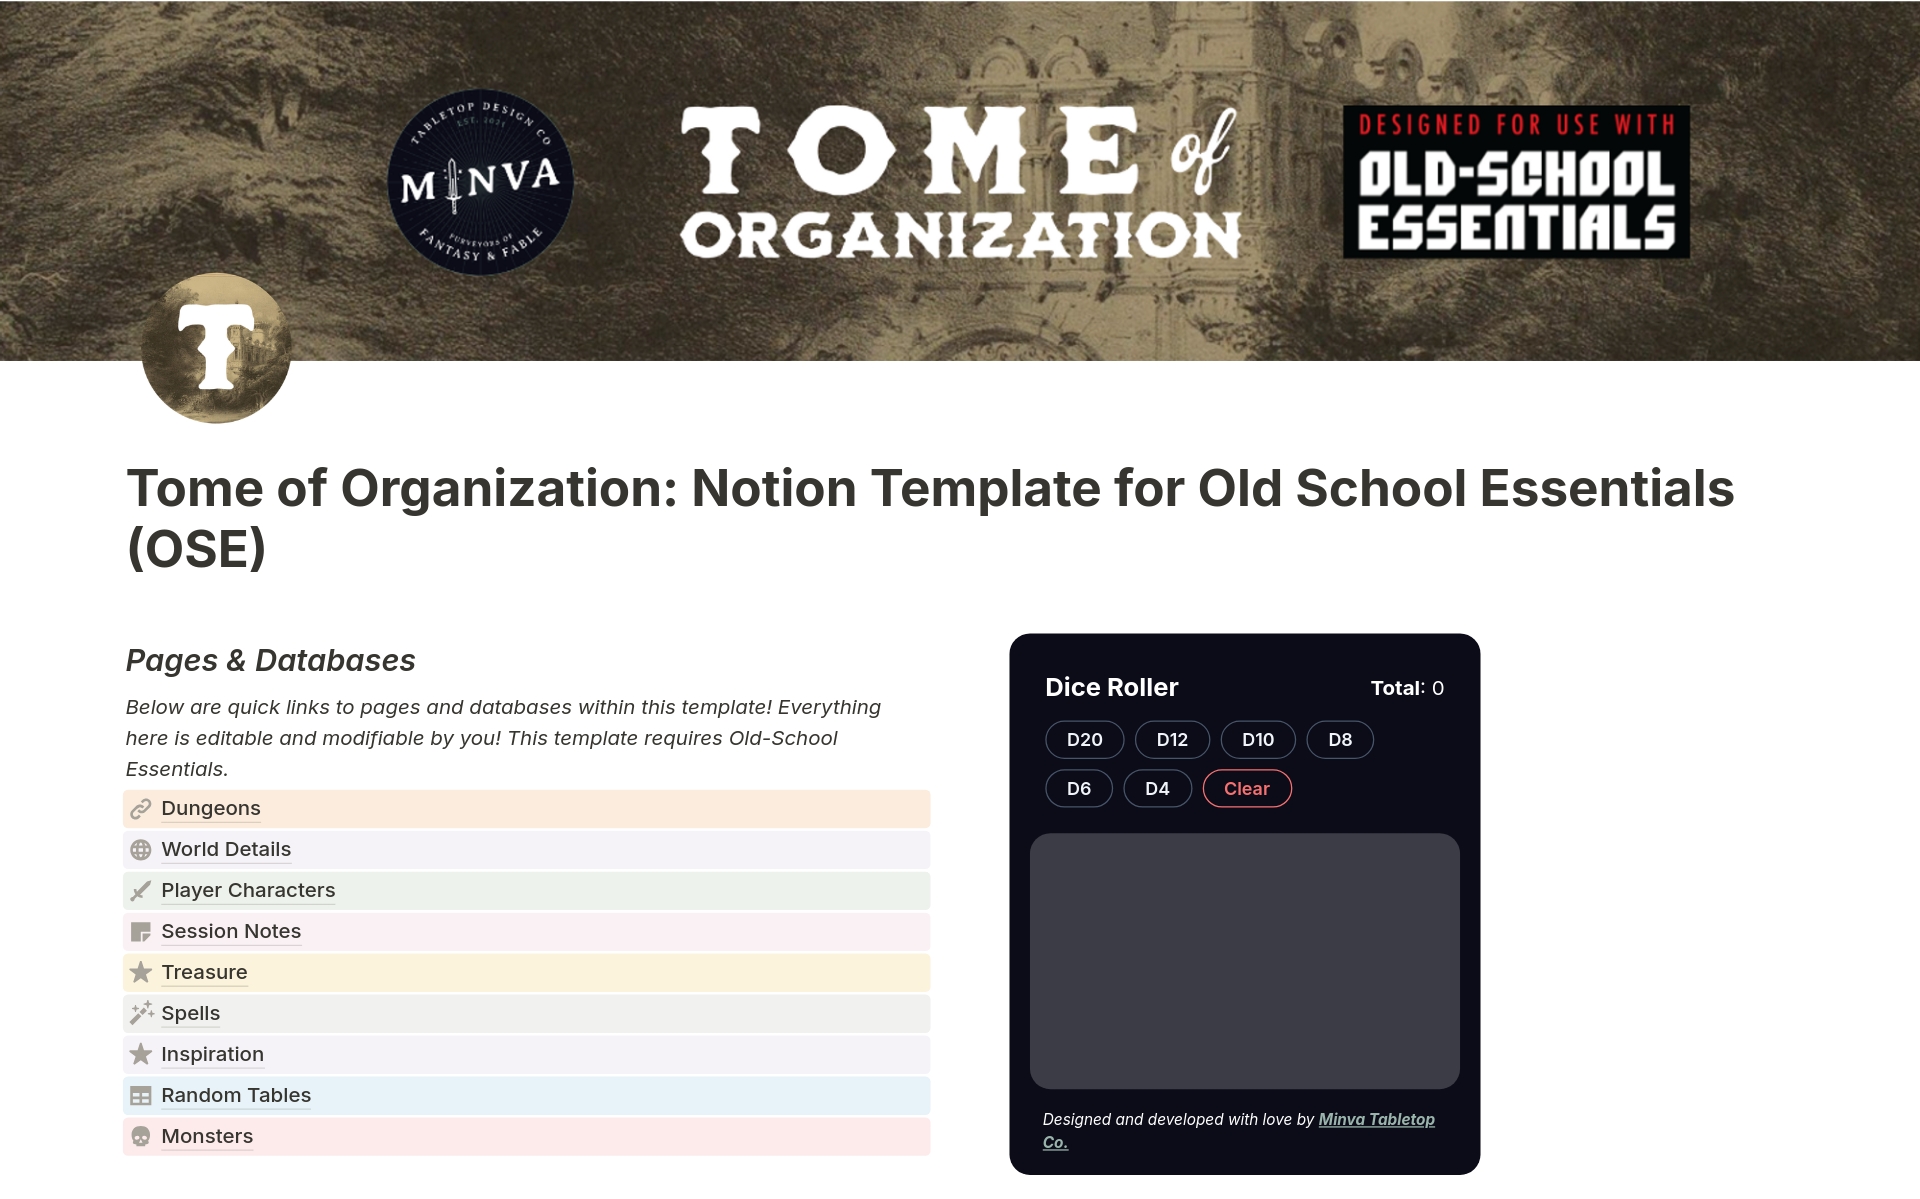 Aperçu du modèle de Tome of Organization for Old-School Essentials OSE